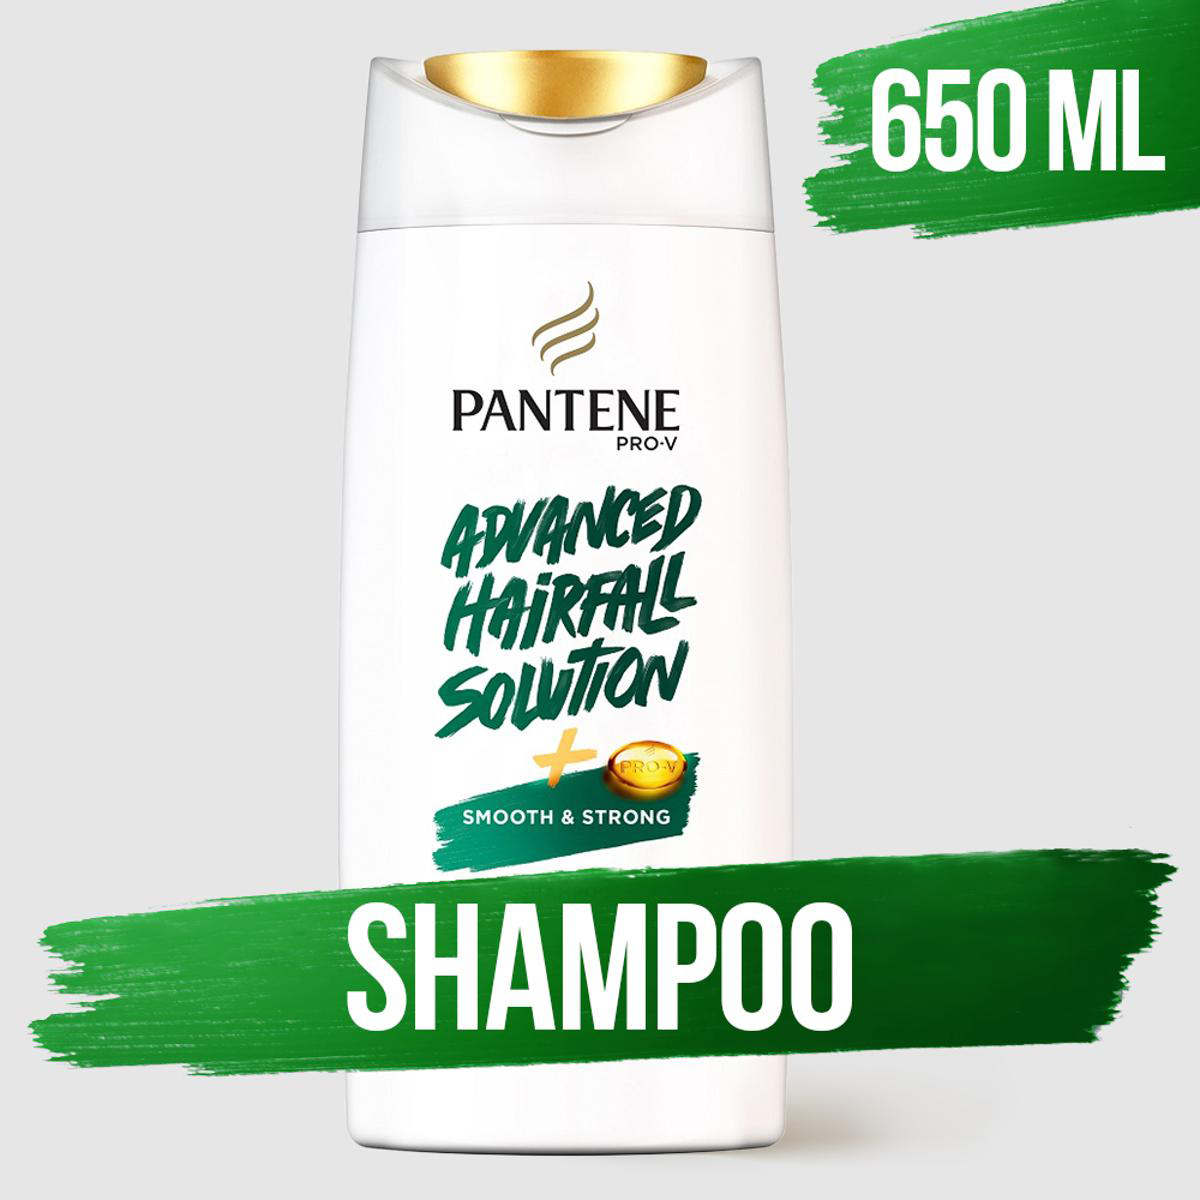 Pantene Smooth & Strong Shampoo 650 ml